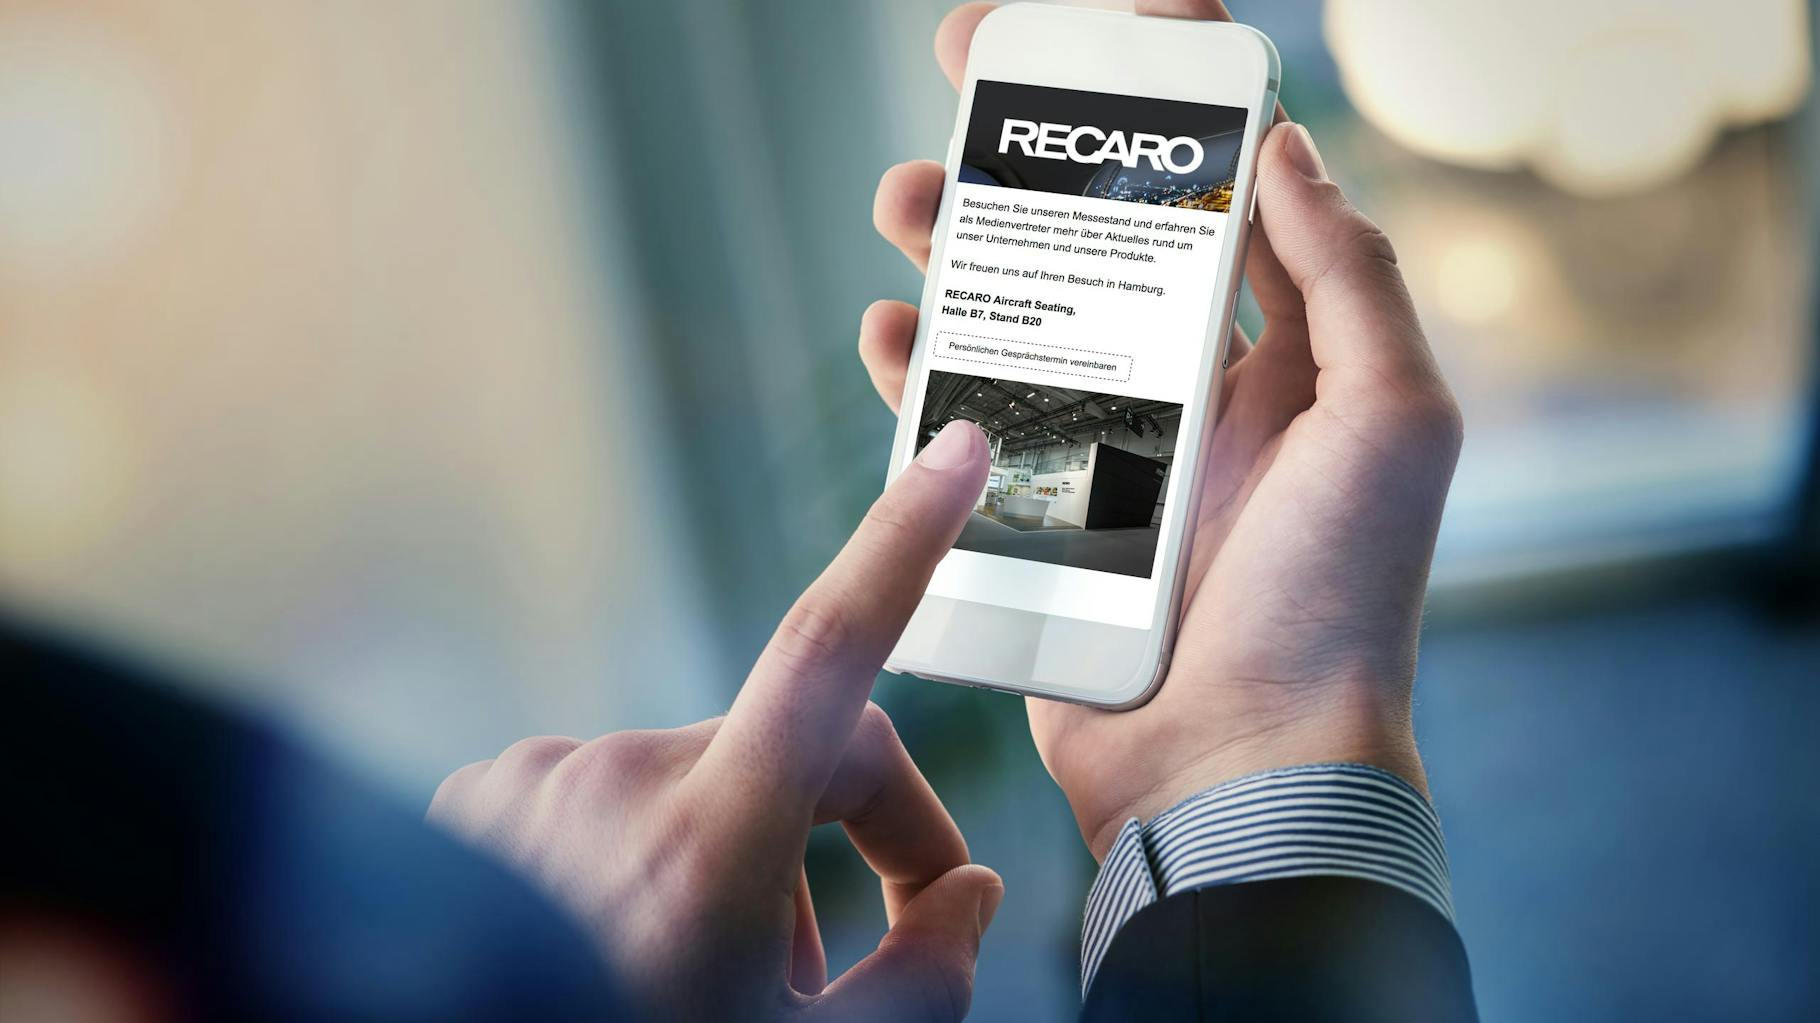 A mobile phone shows the Recaro website 